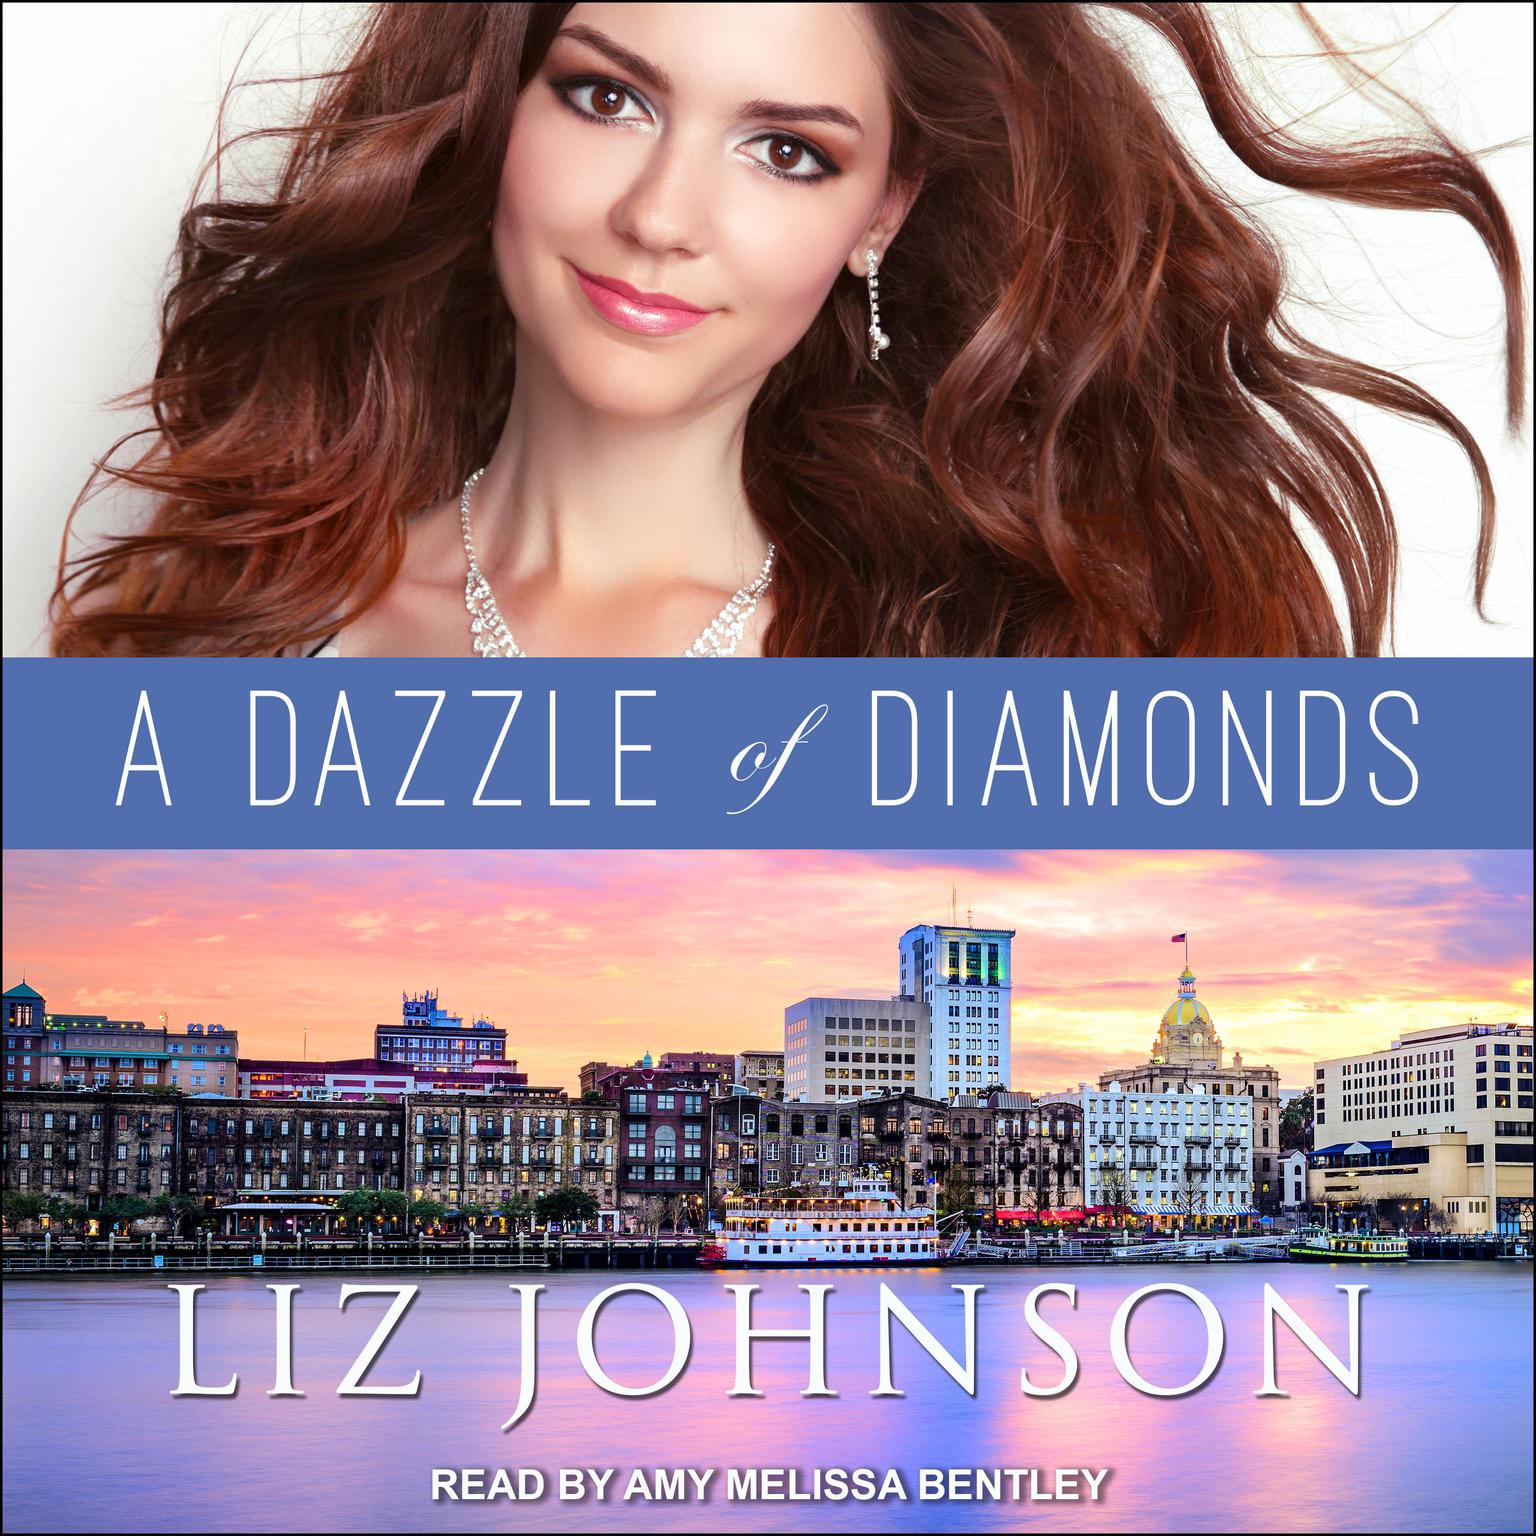 A Dazzle of Diamonds Audiobook, by Liz Johnson